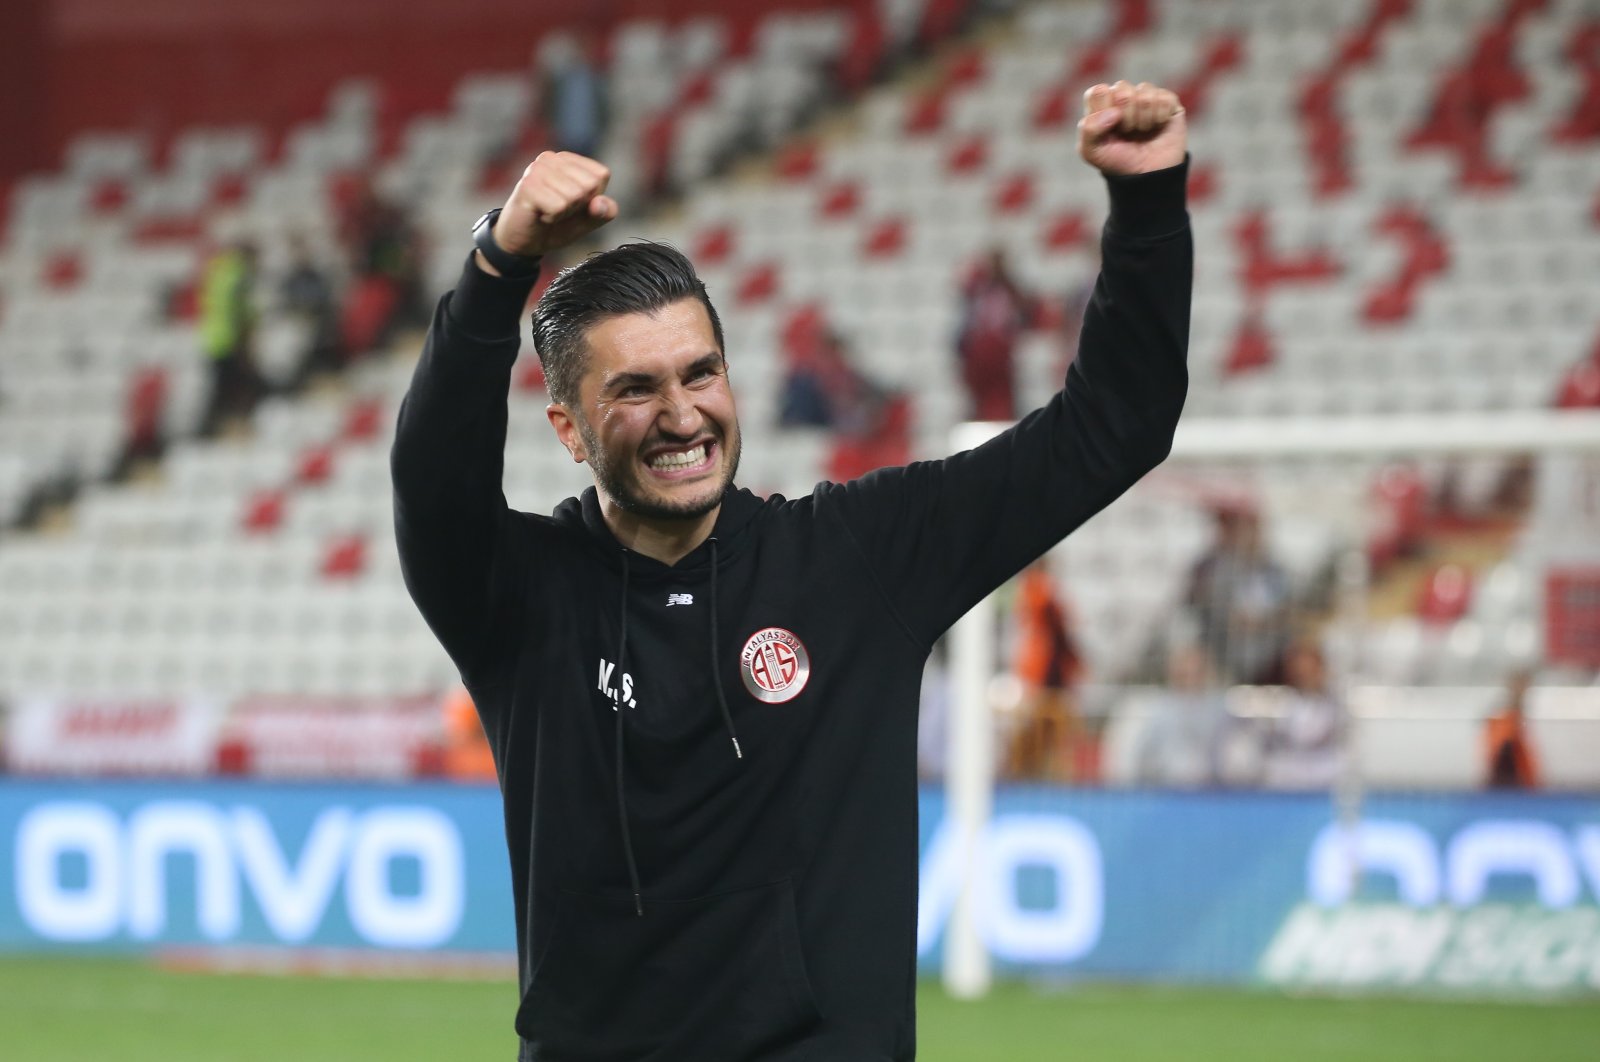 Antalyaspor coach Nuri Şahin reacts after a match against Konyaspor, Antalya, Turkey, April 9, 2022. (AA Photo)